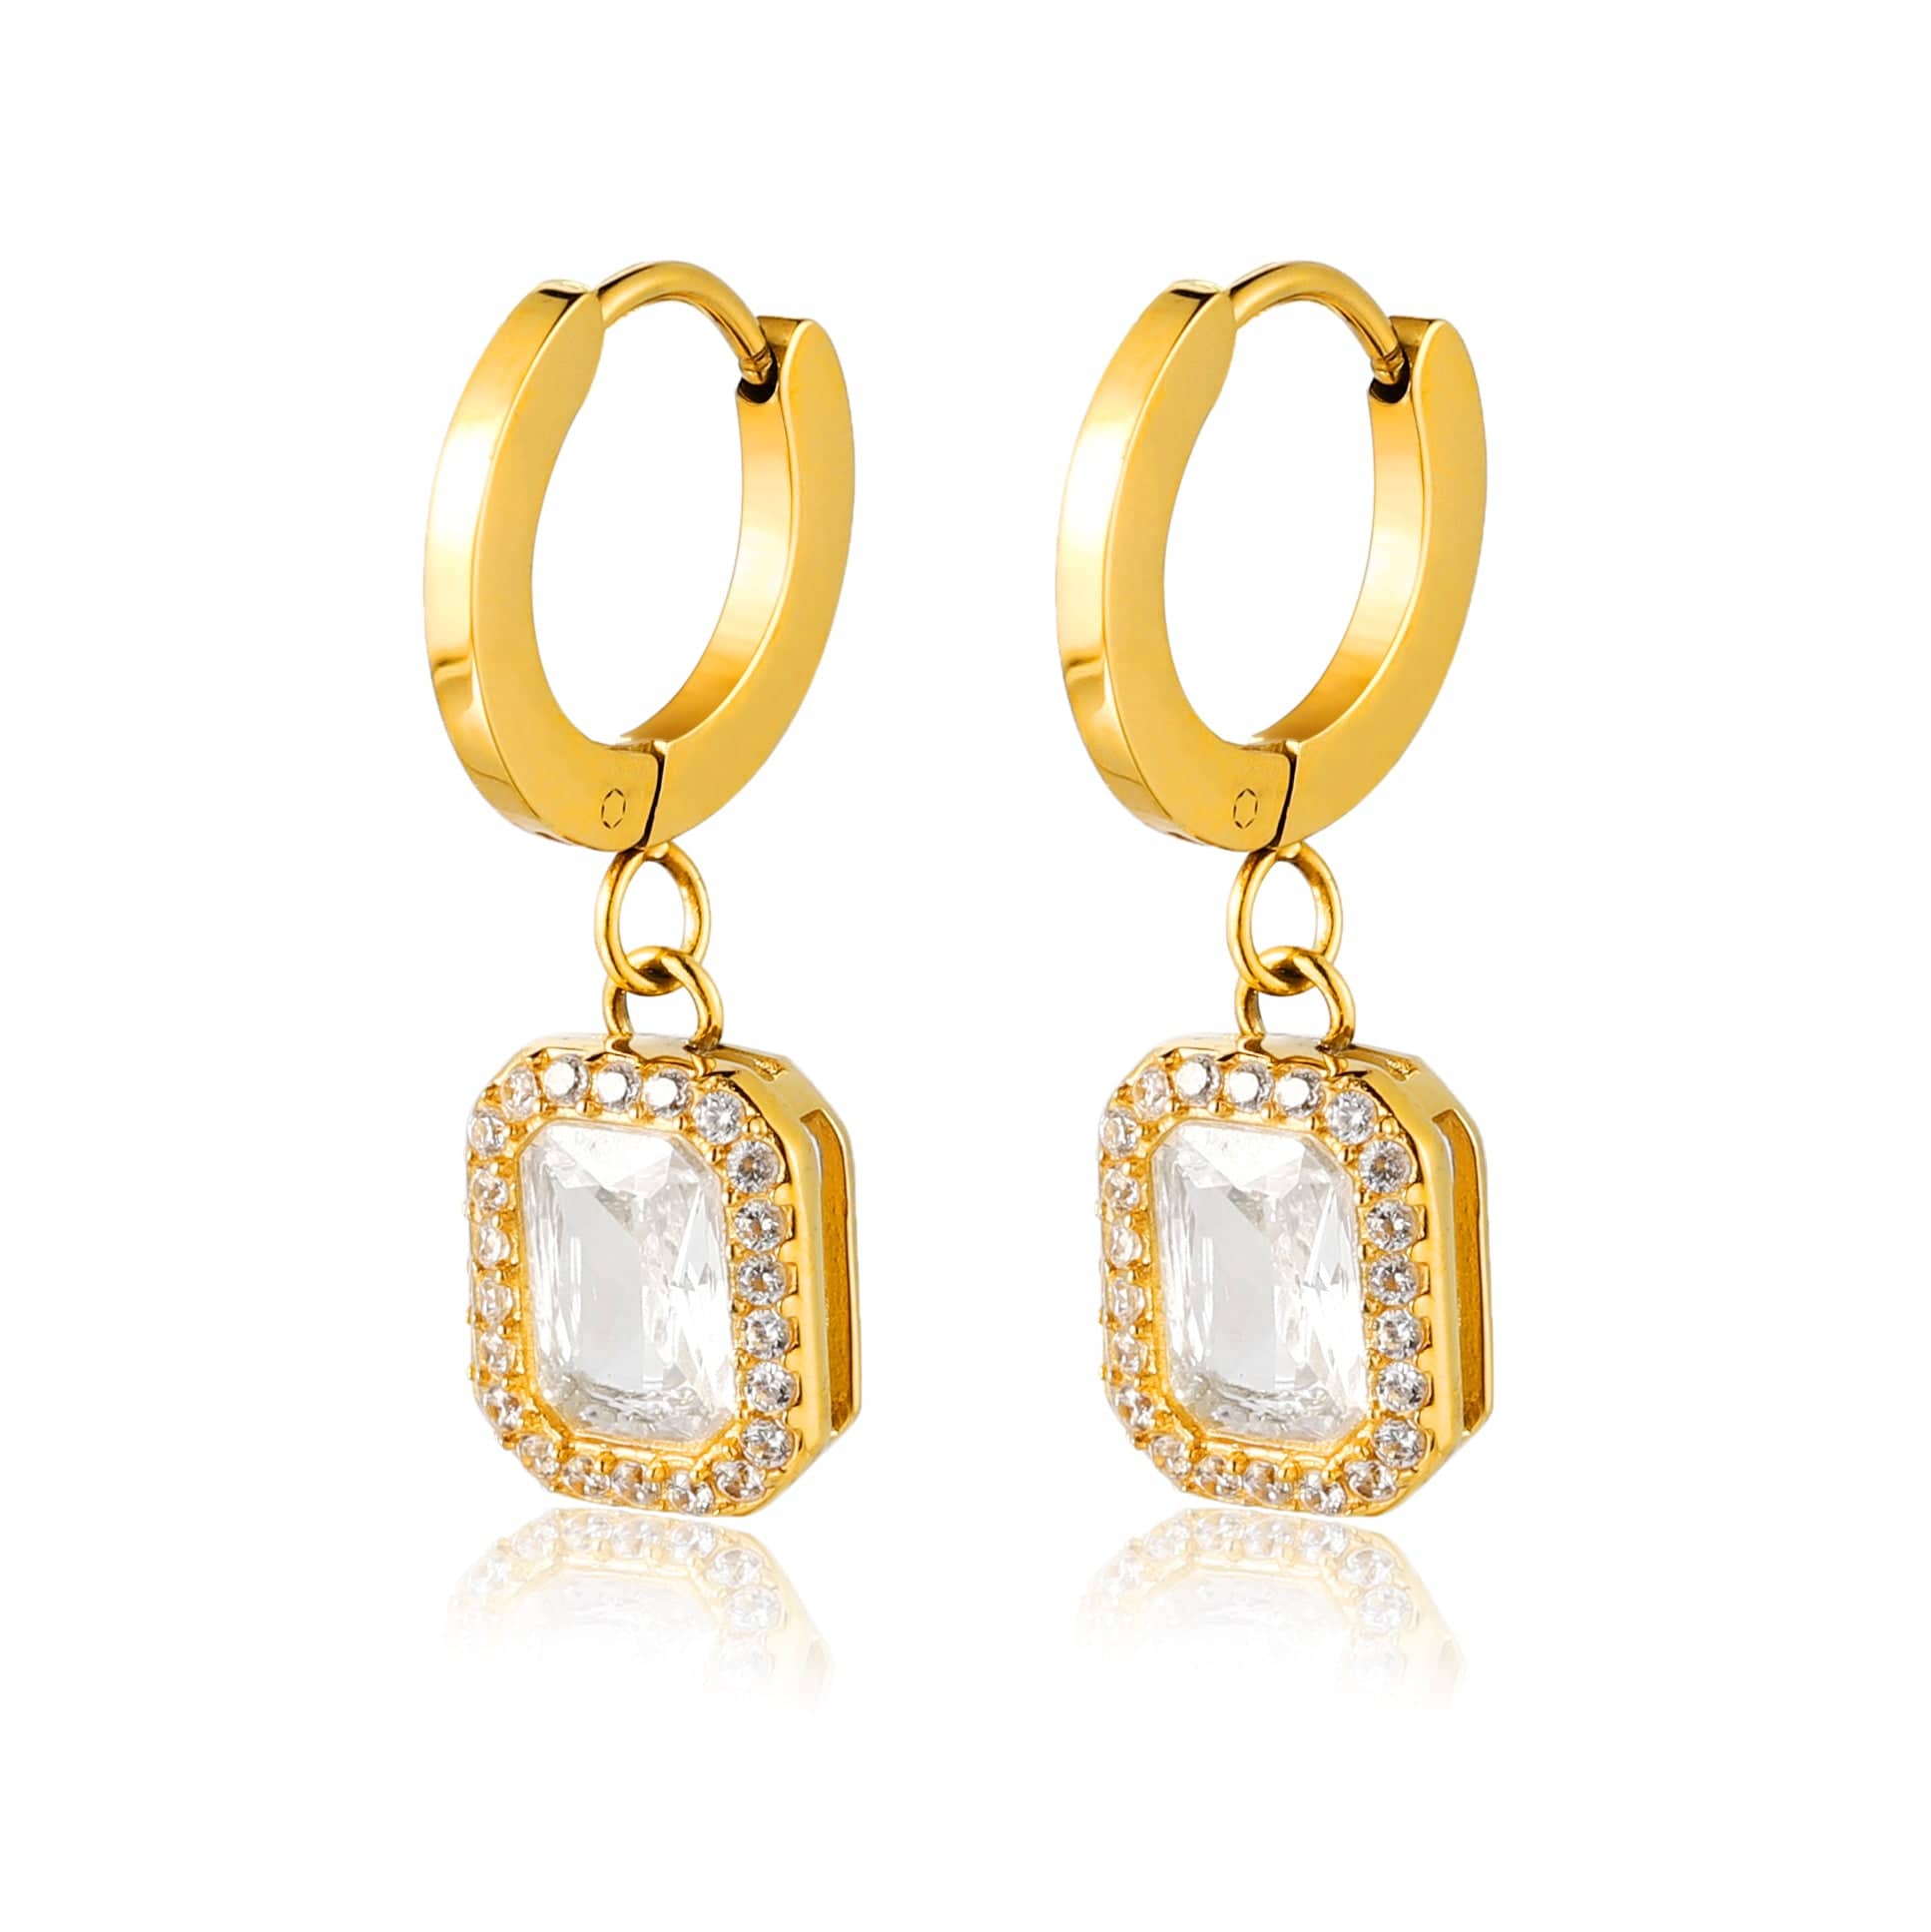 bianco rosso Enchanted Gemstone Bundle cyprus greece jewelry gift free shipping europe worldwide